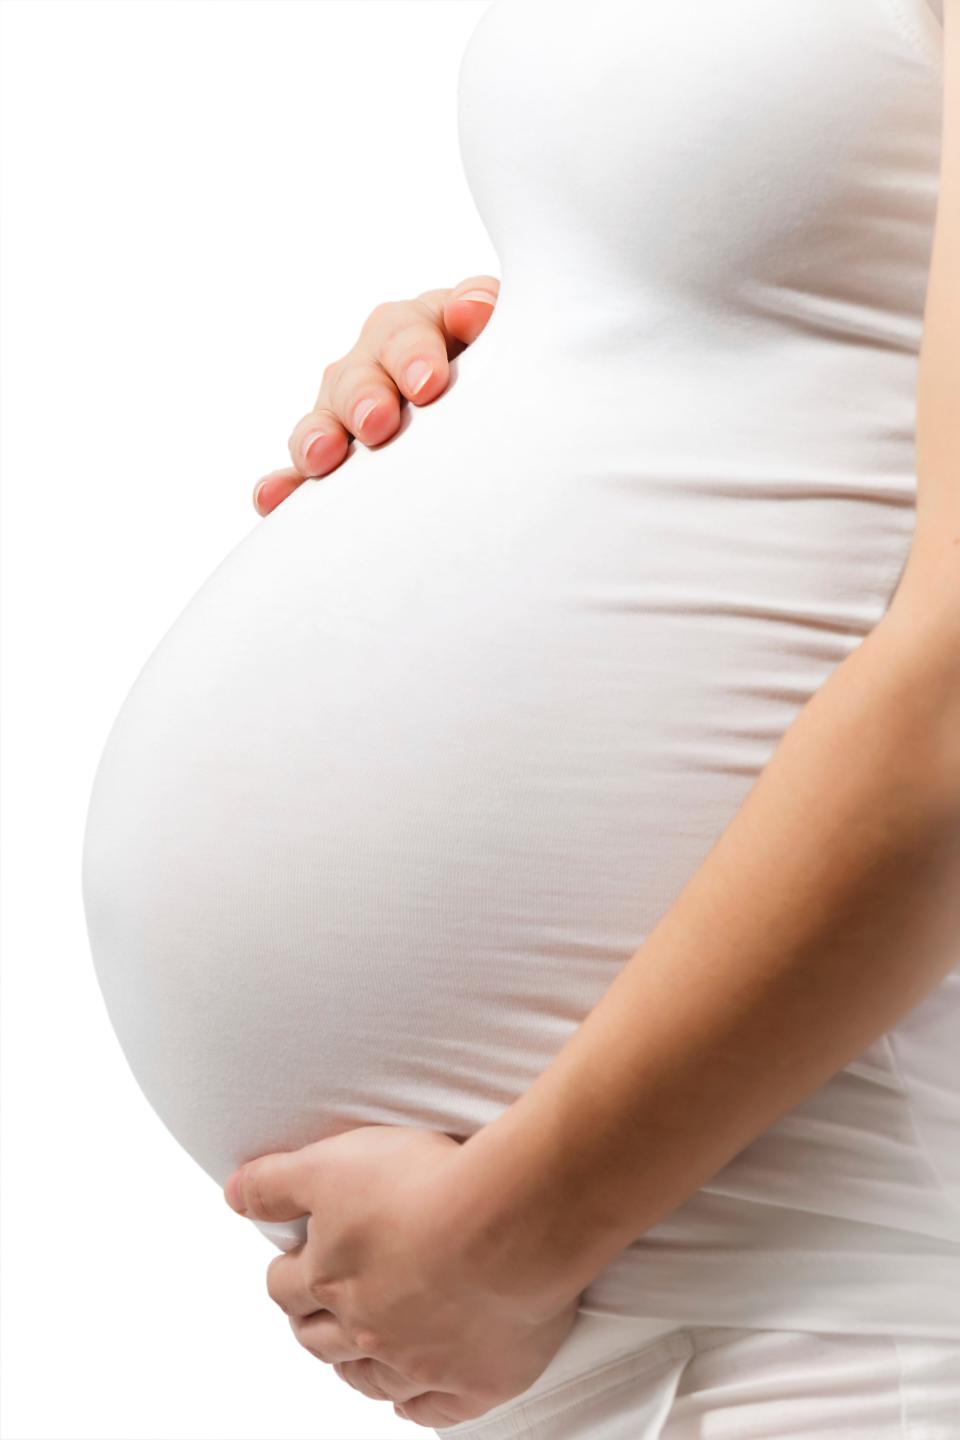 Approximately 65 stillbirths happen per day in America.